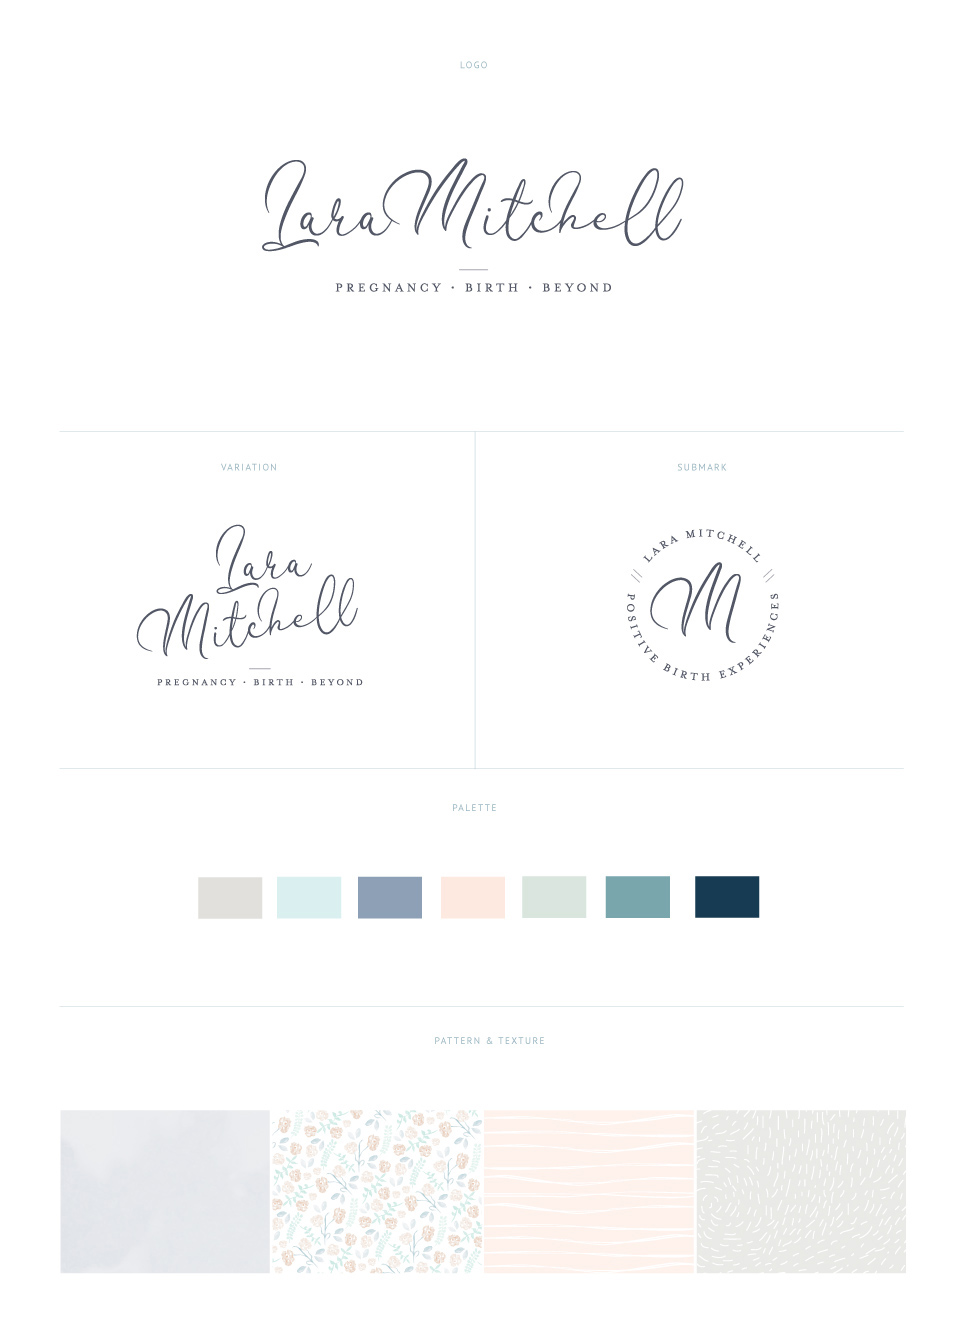 Branding designed by Leaff Design, for Lara Mitchell